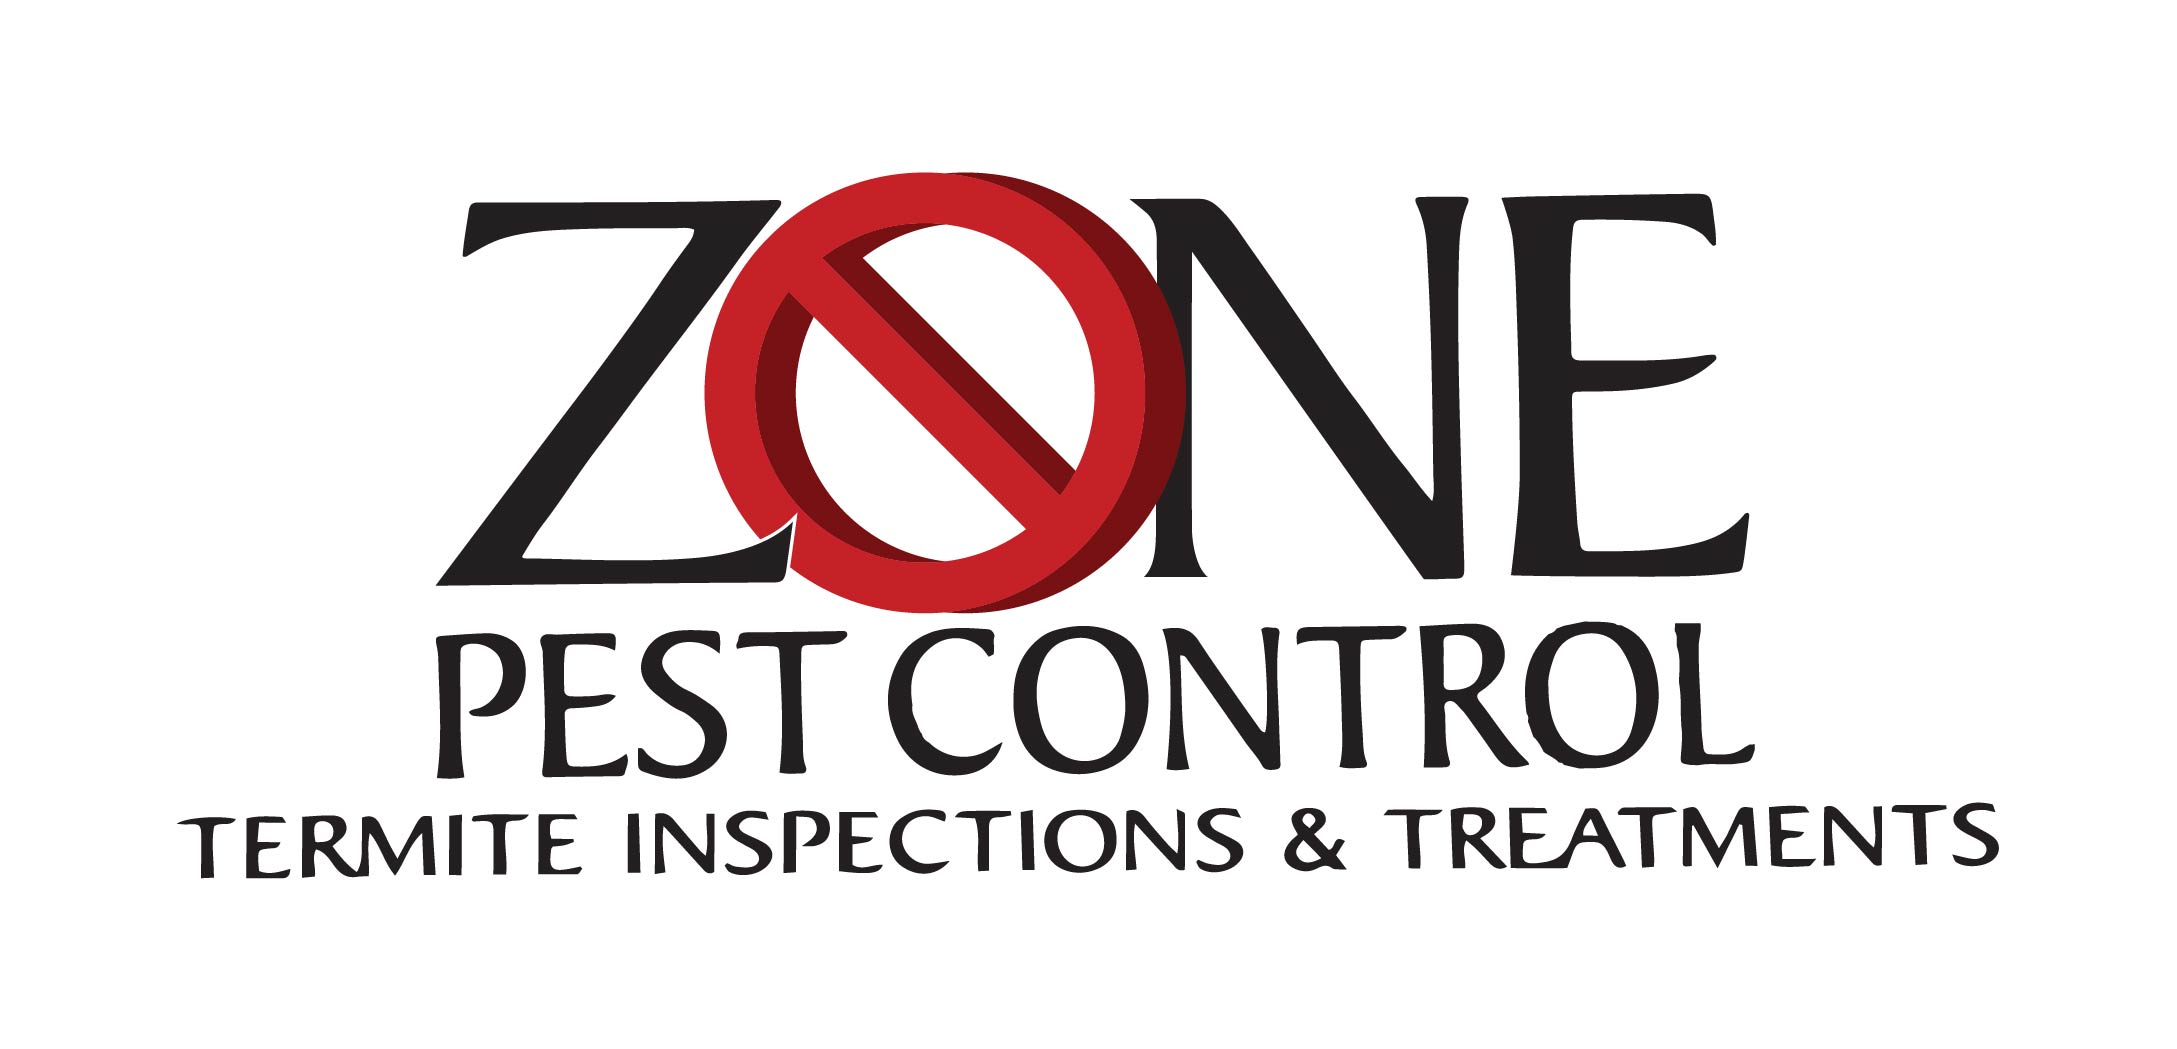 Carl Evans Zone Pest Control